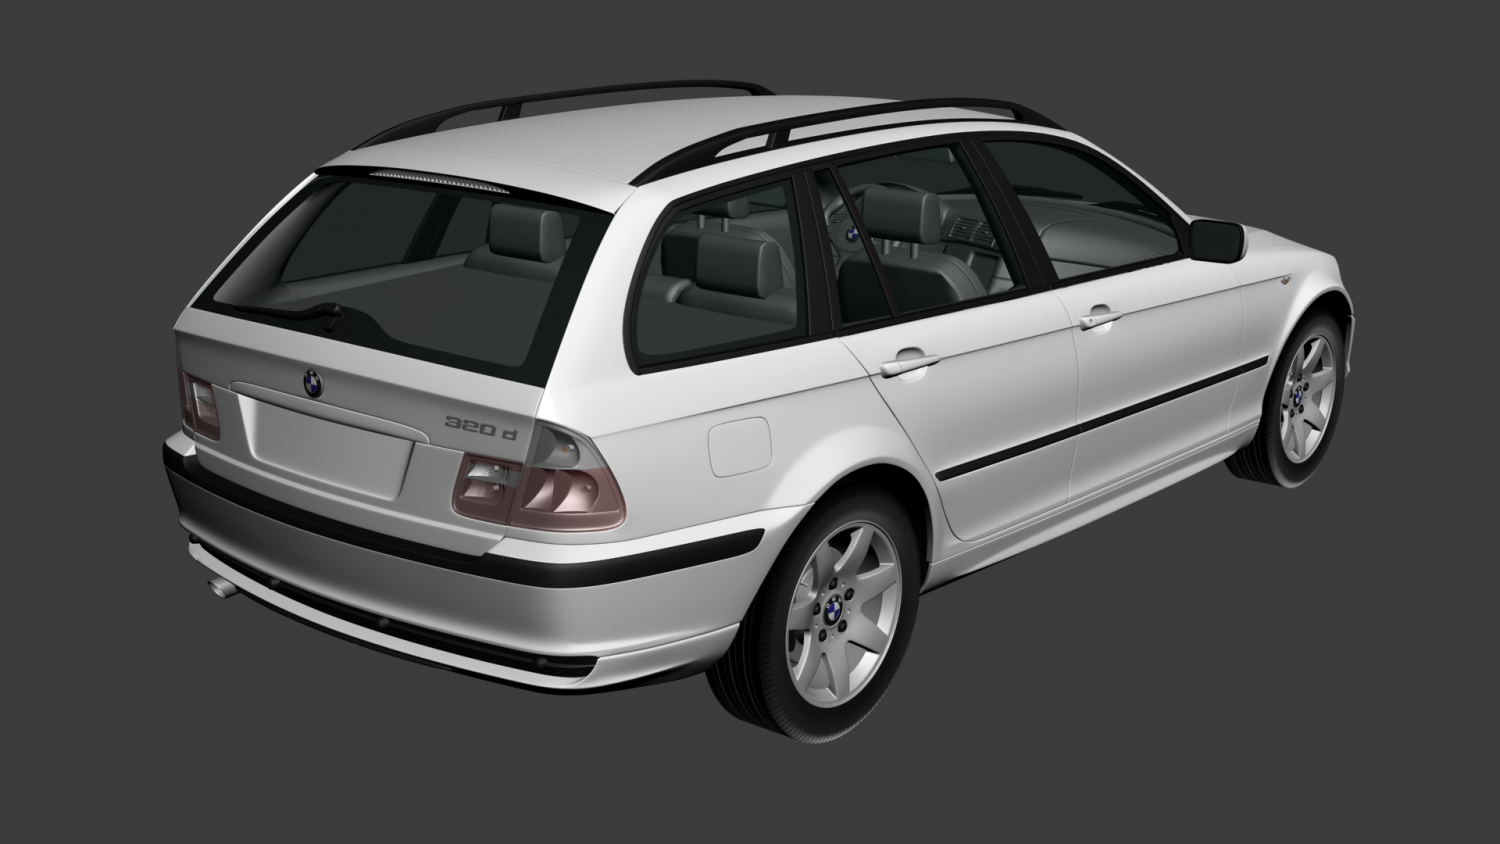 BMW 3 Series (E46) project - Classics World